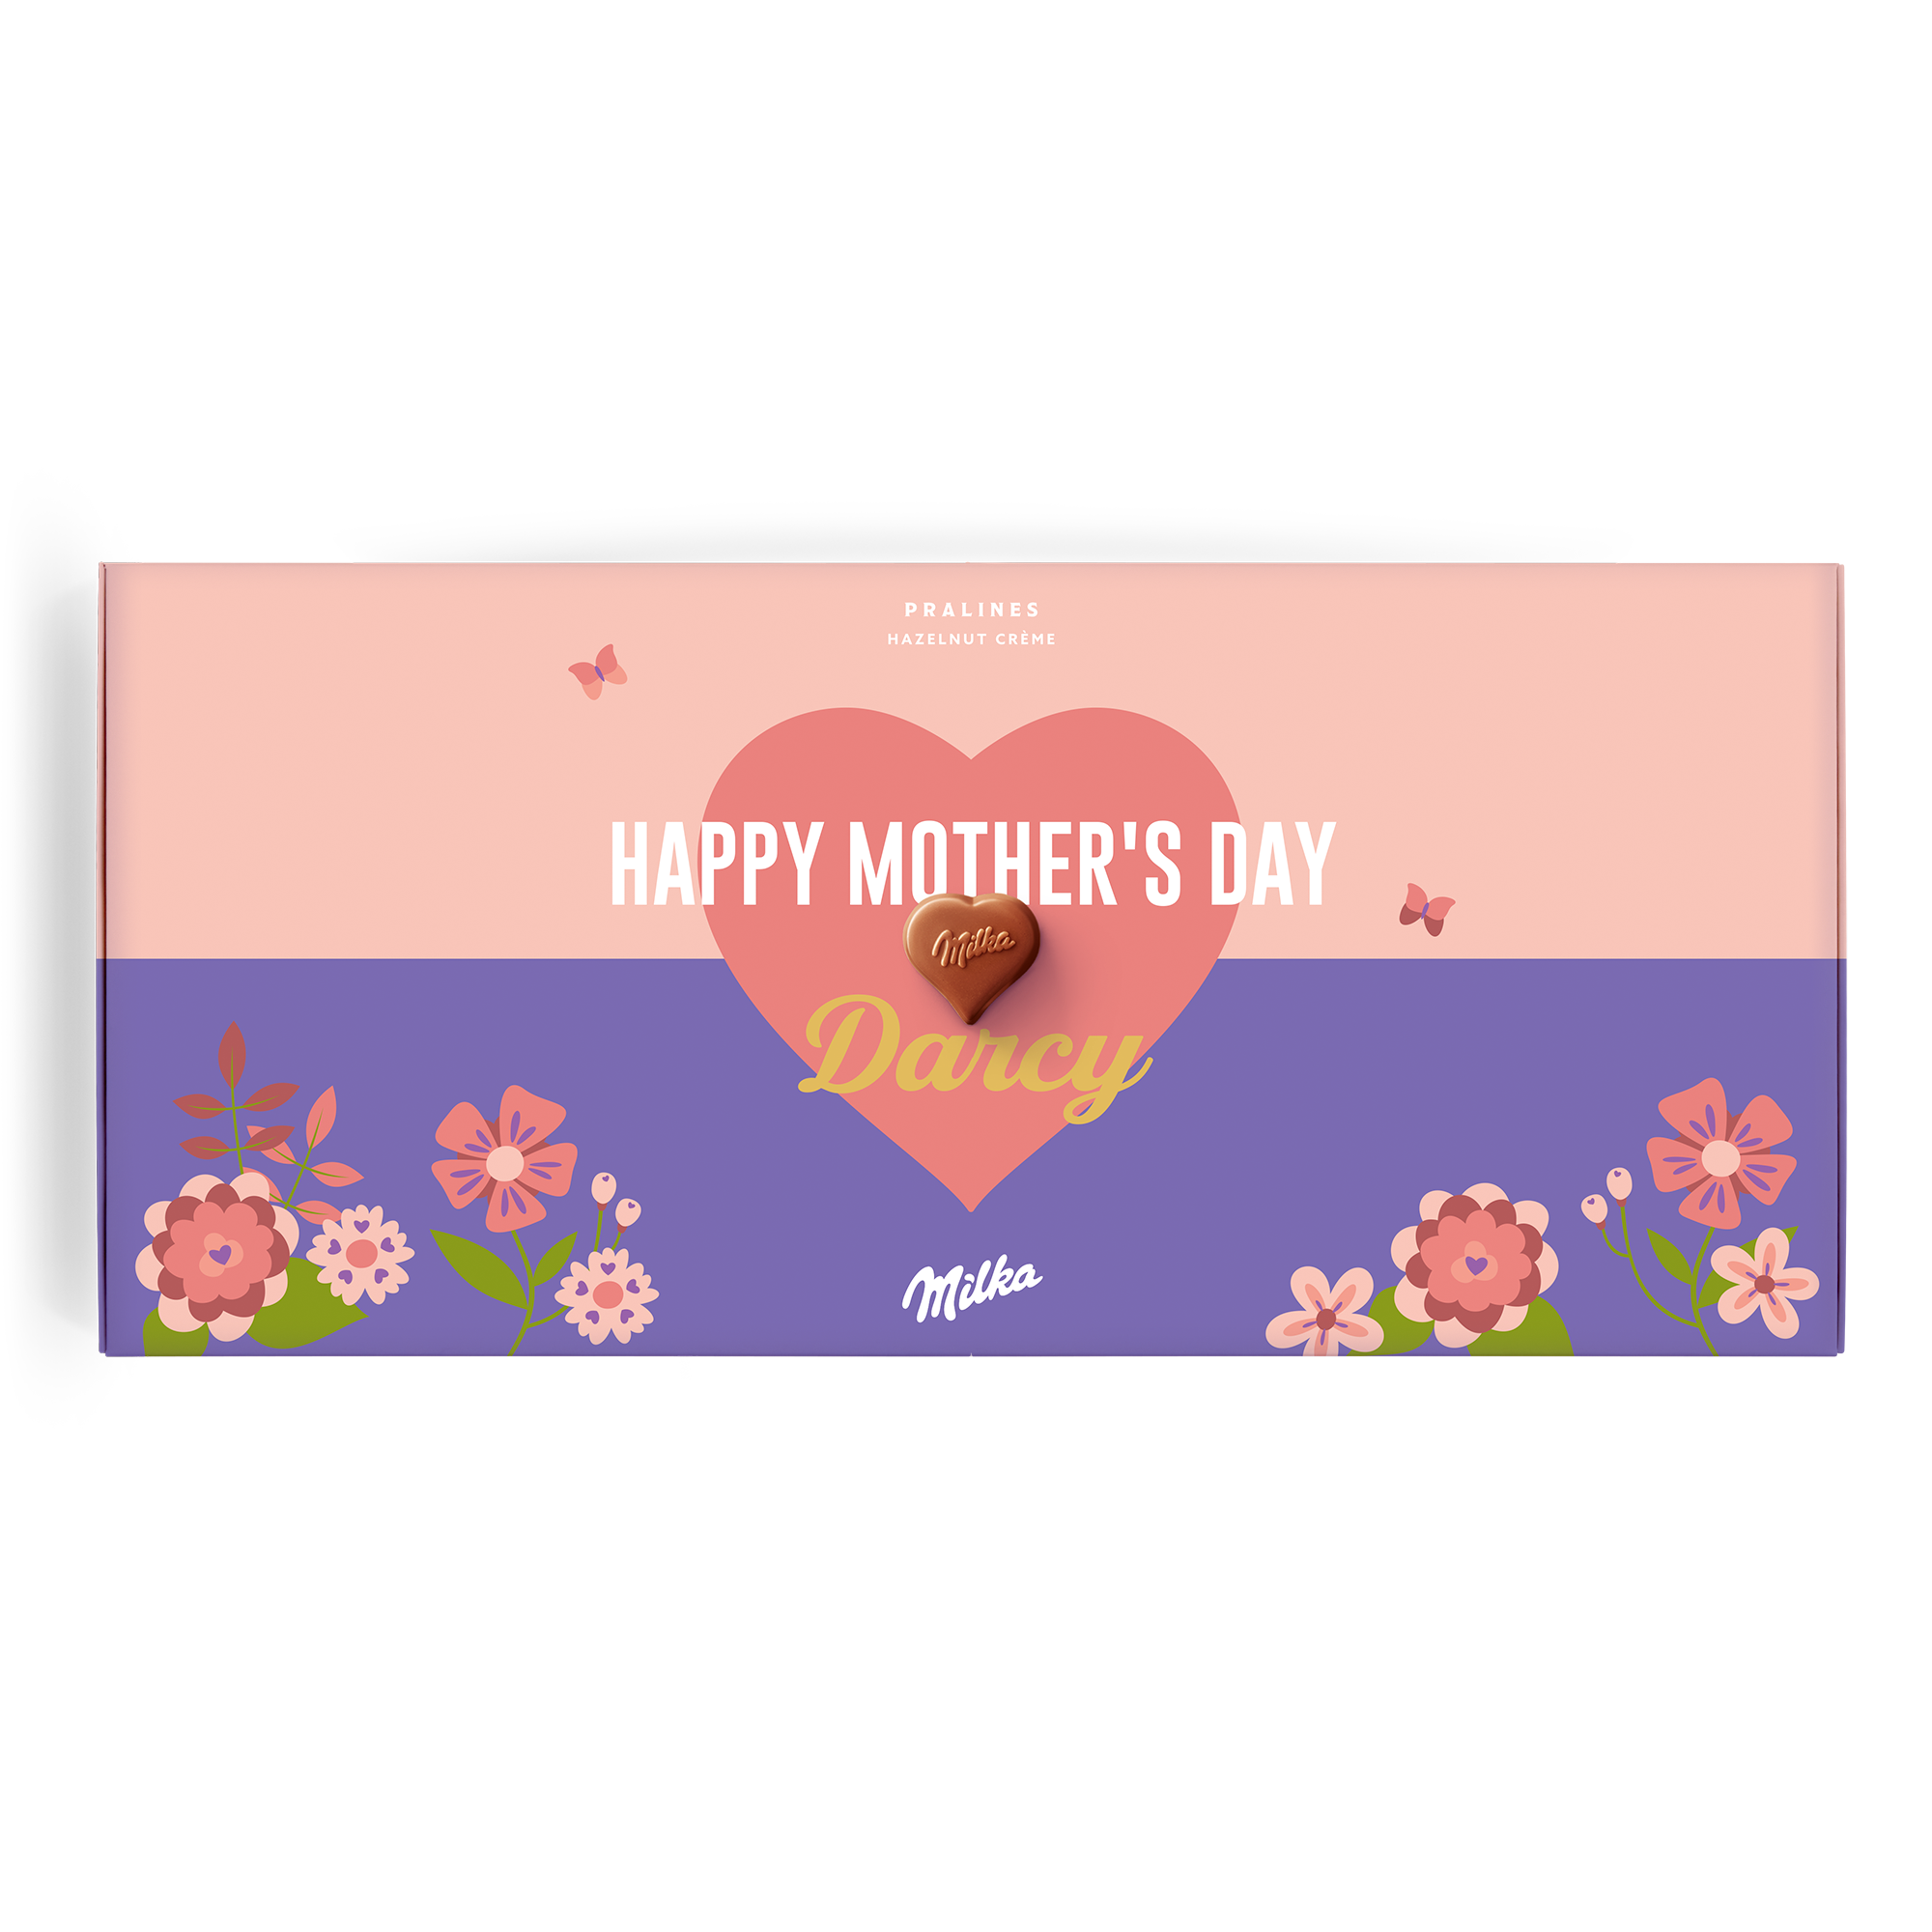 Milka giftbox - Mother's Day 